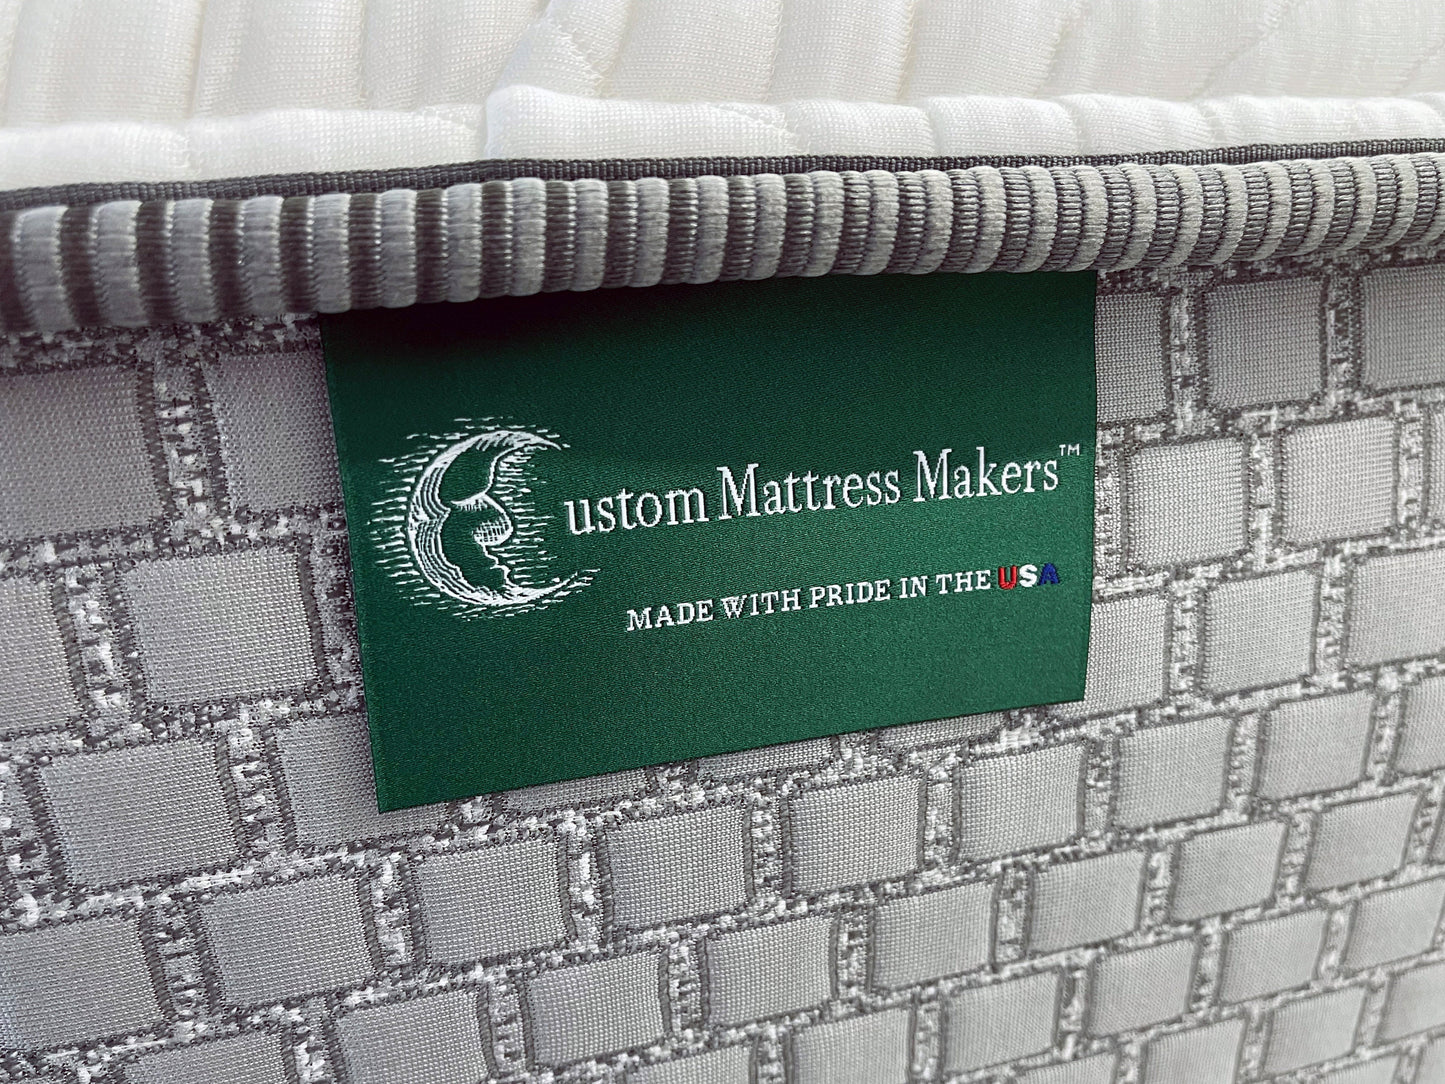 Clearwater Medium-Firm, custom mattress